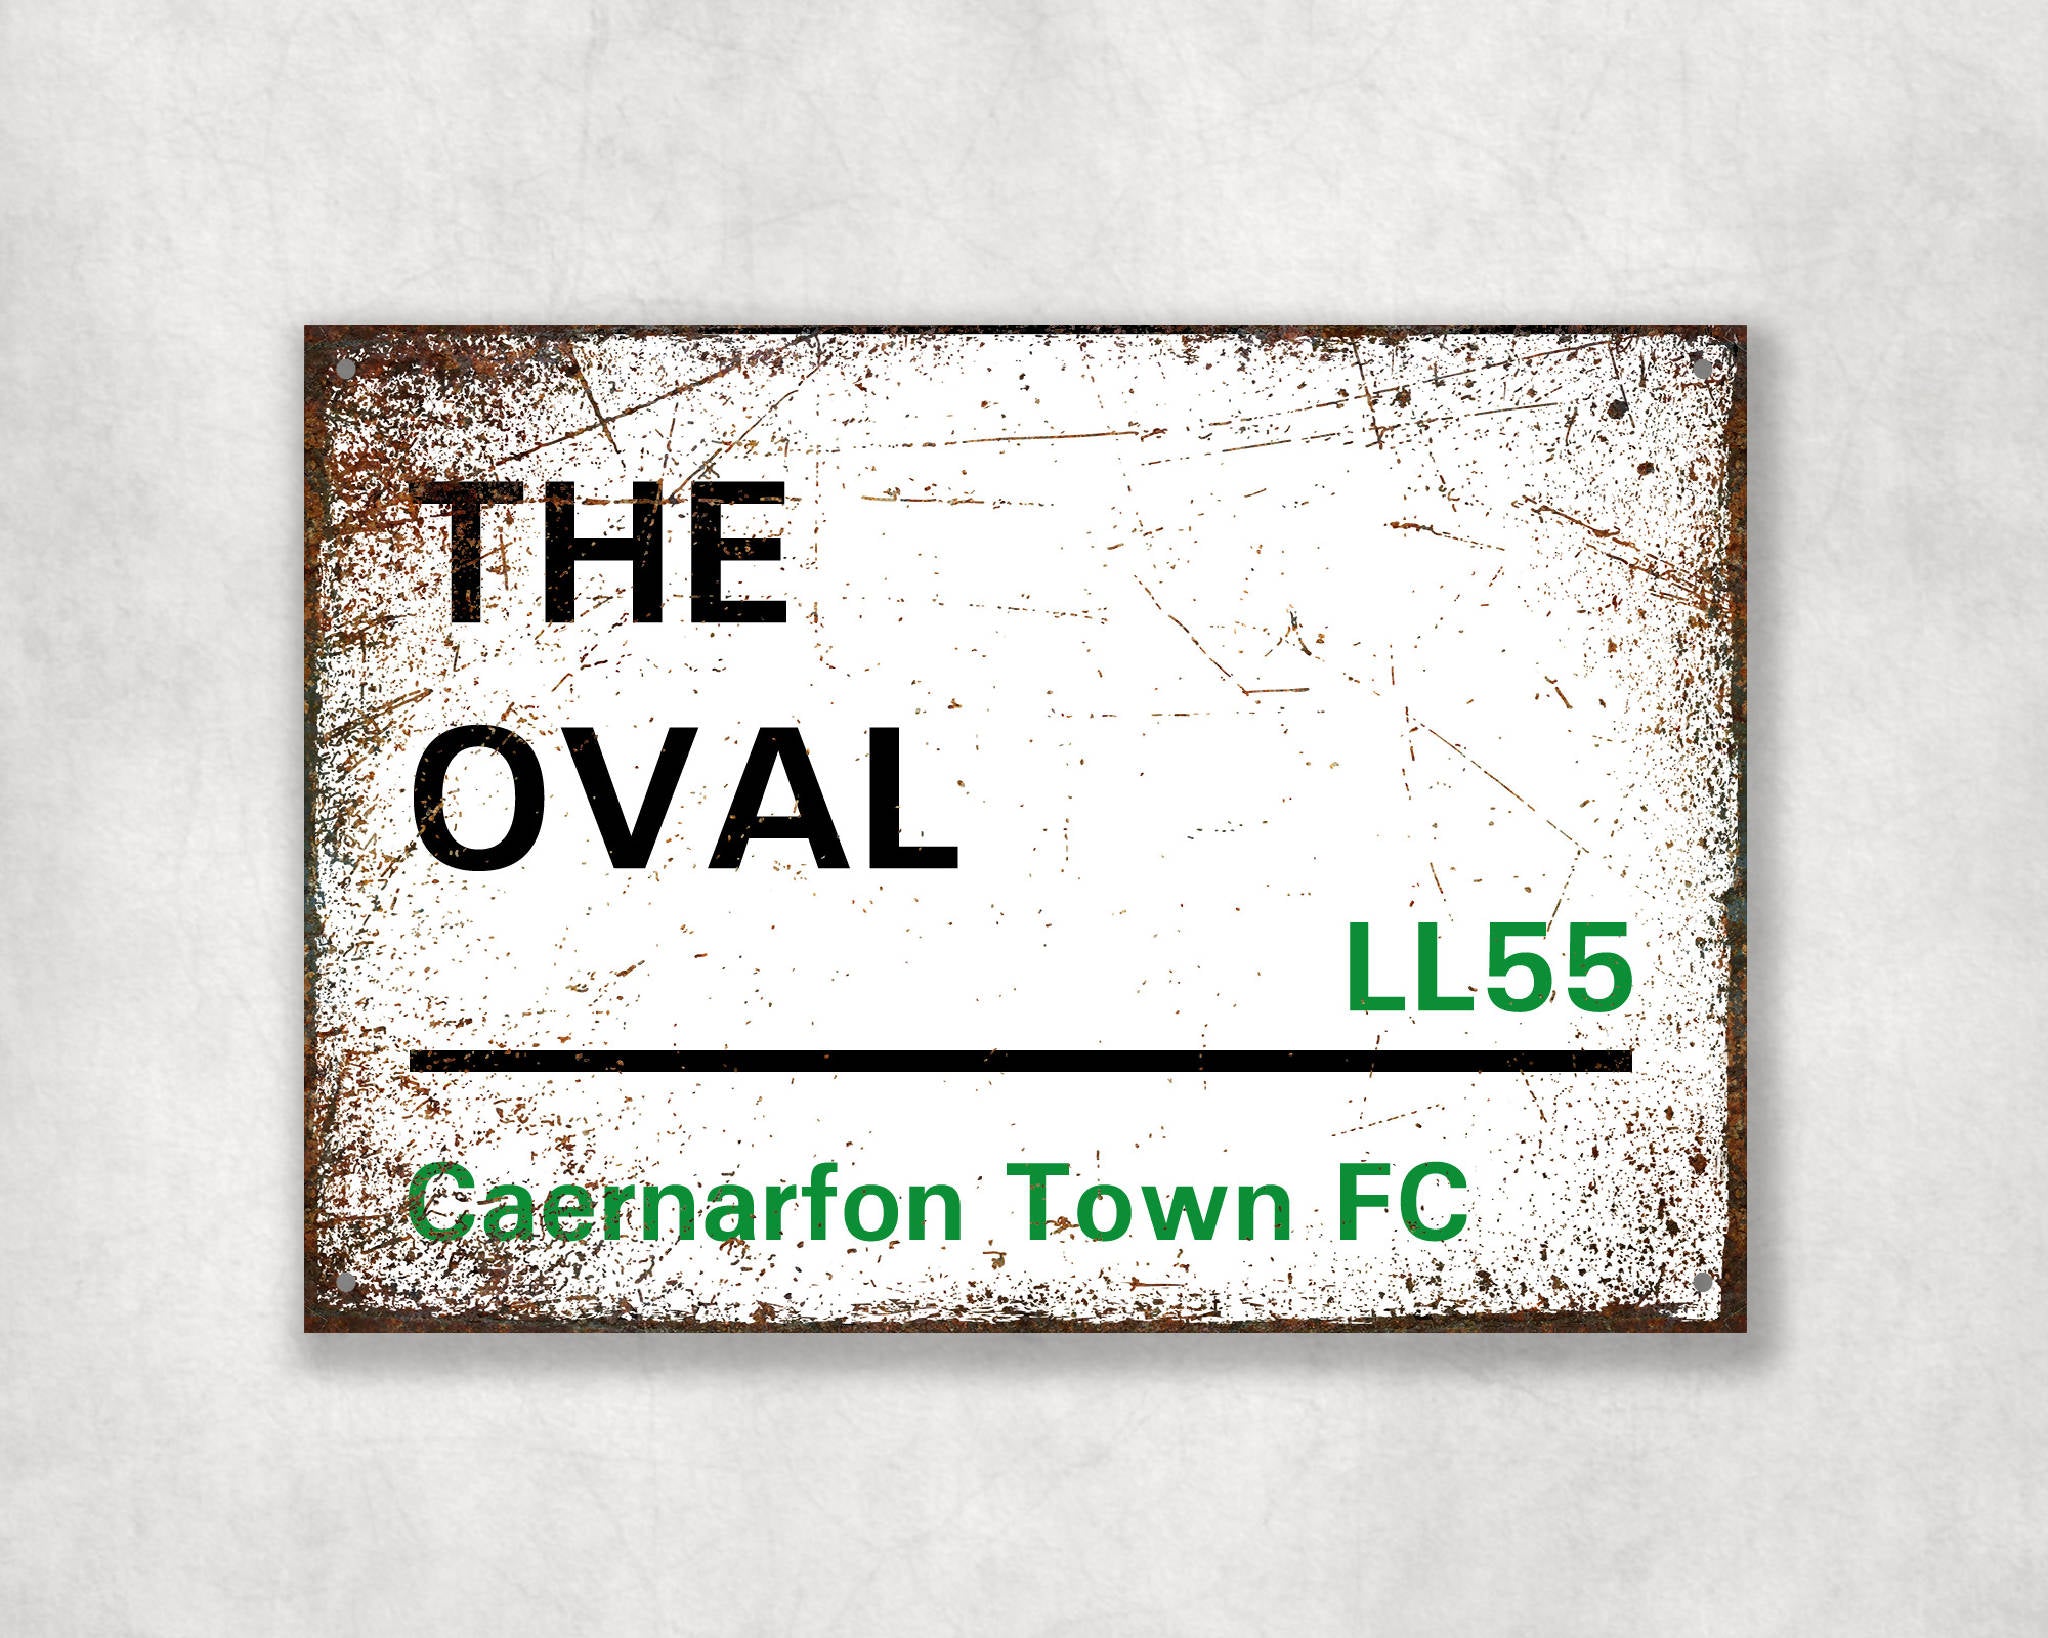 The Oval - Caernarfon Town FC aluminium printed metal street sign - gift, keepsake, football gift